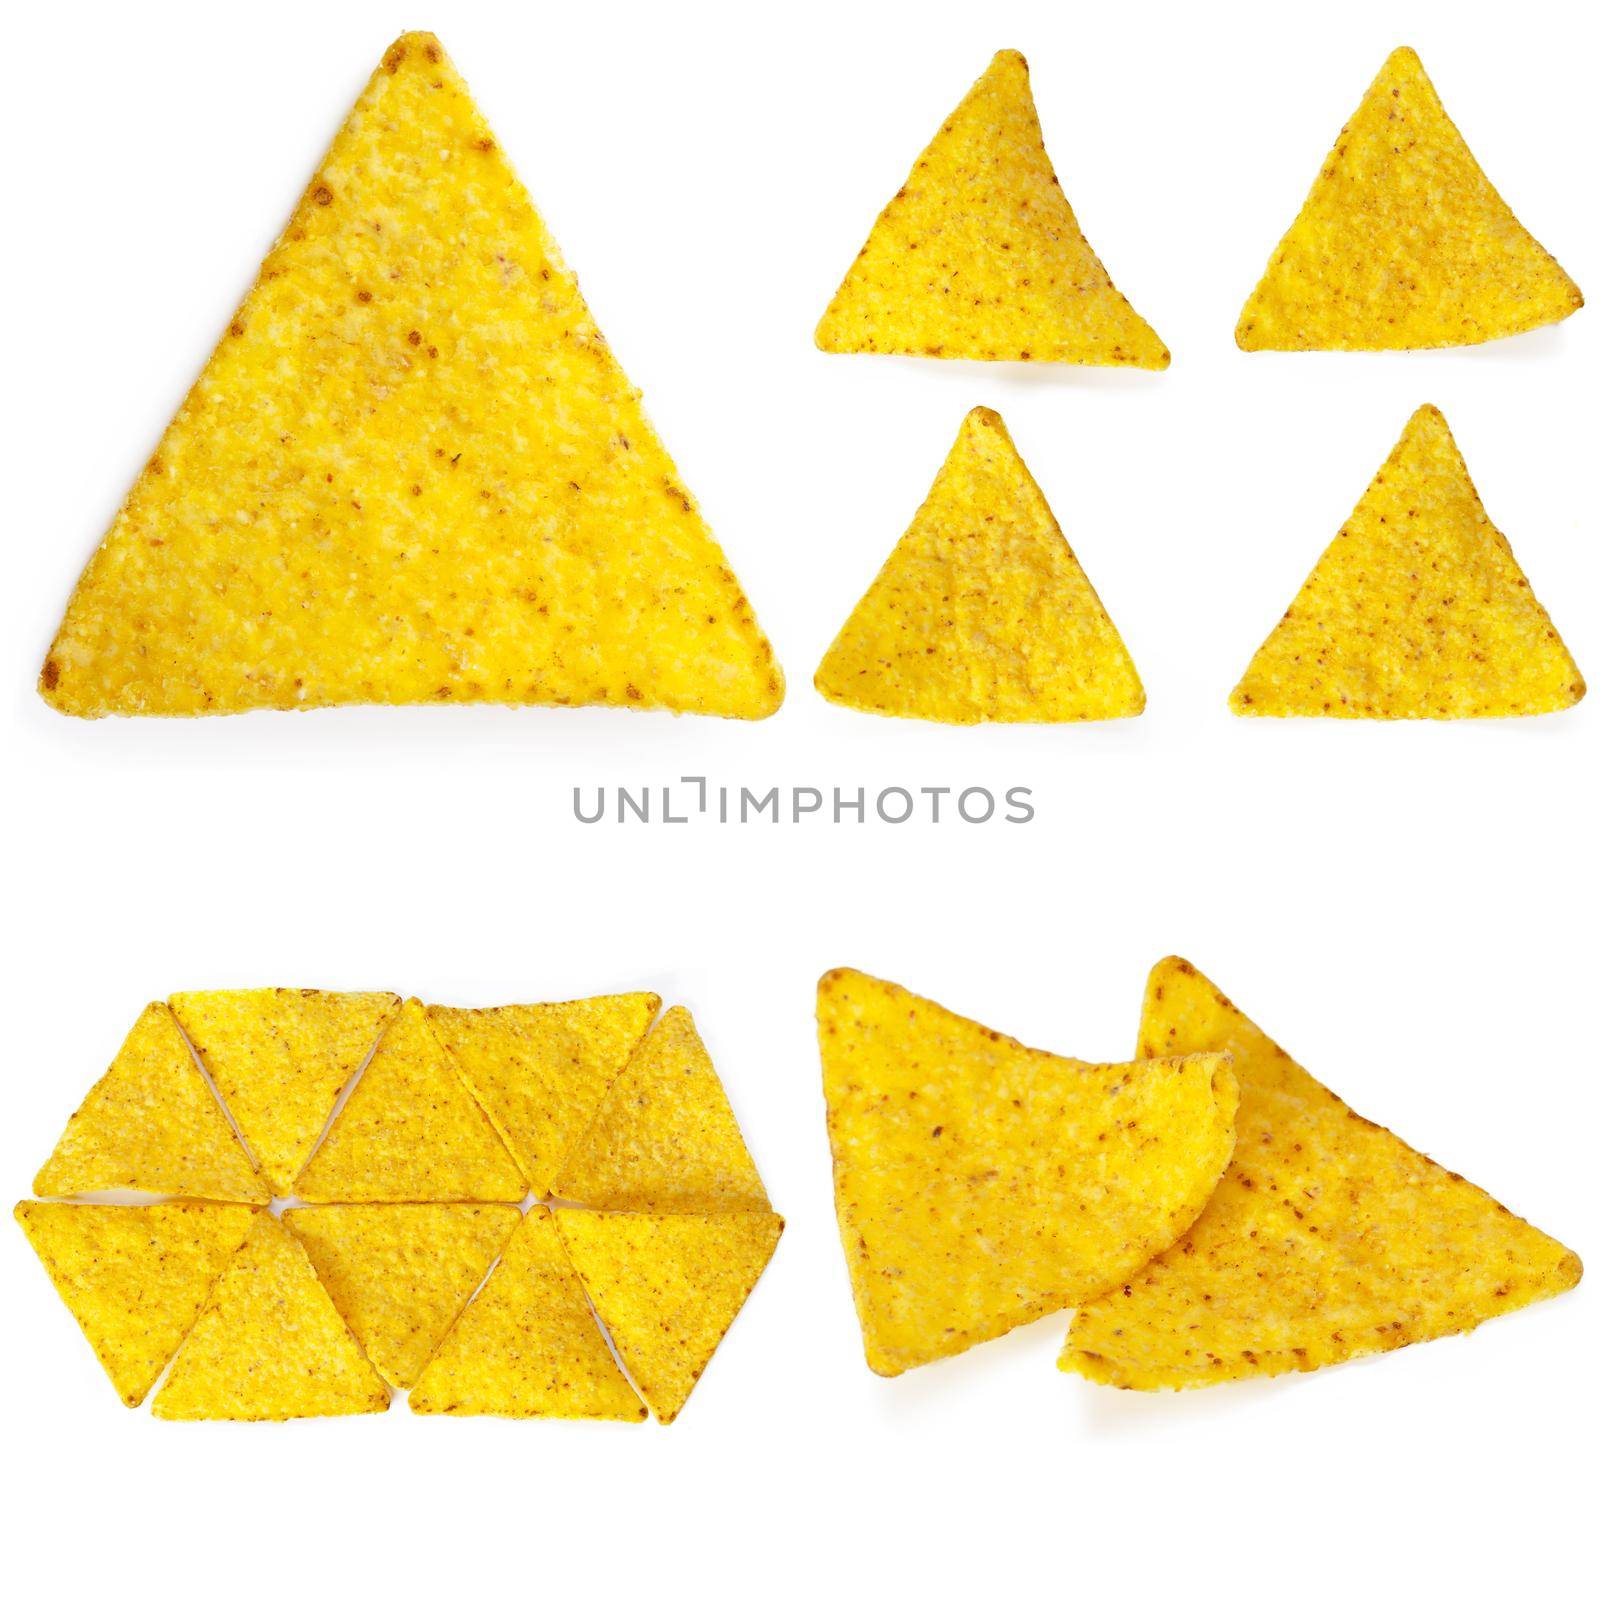 Mexican nachos set on white background collage